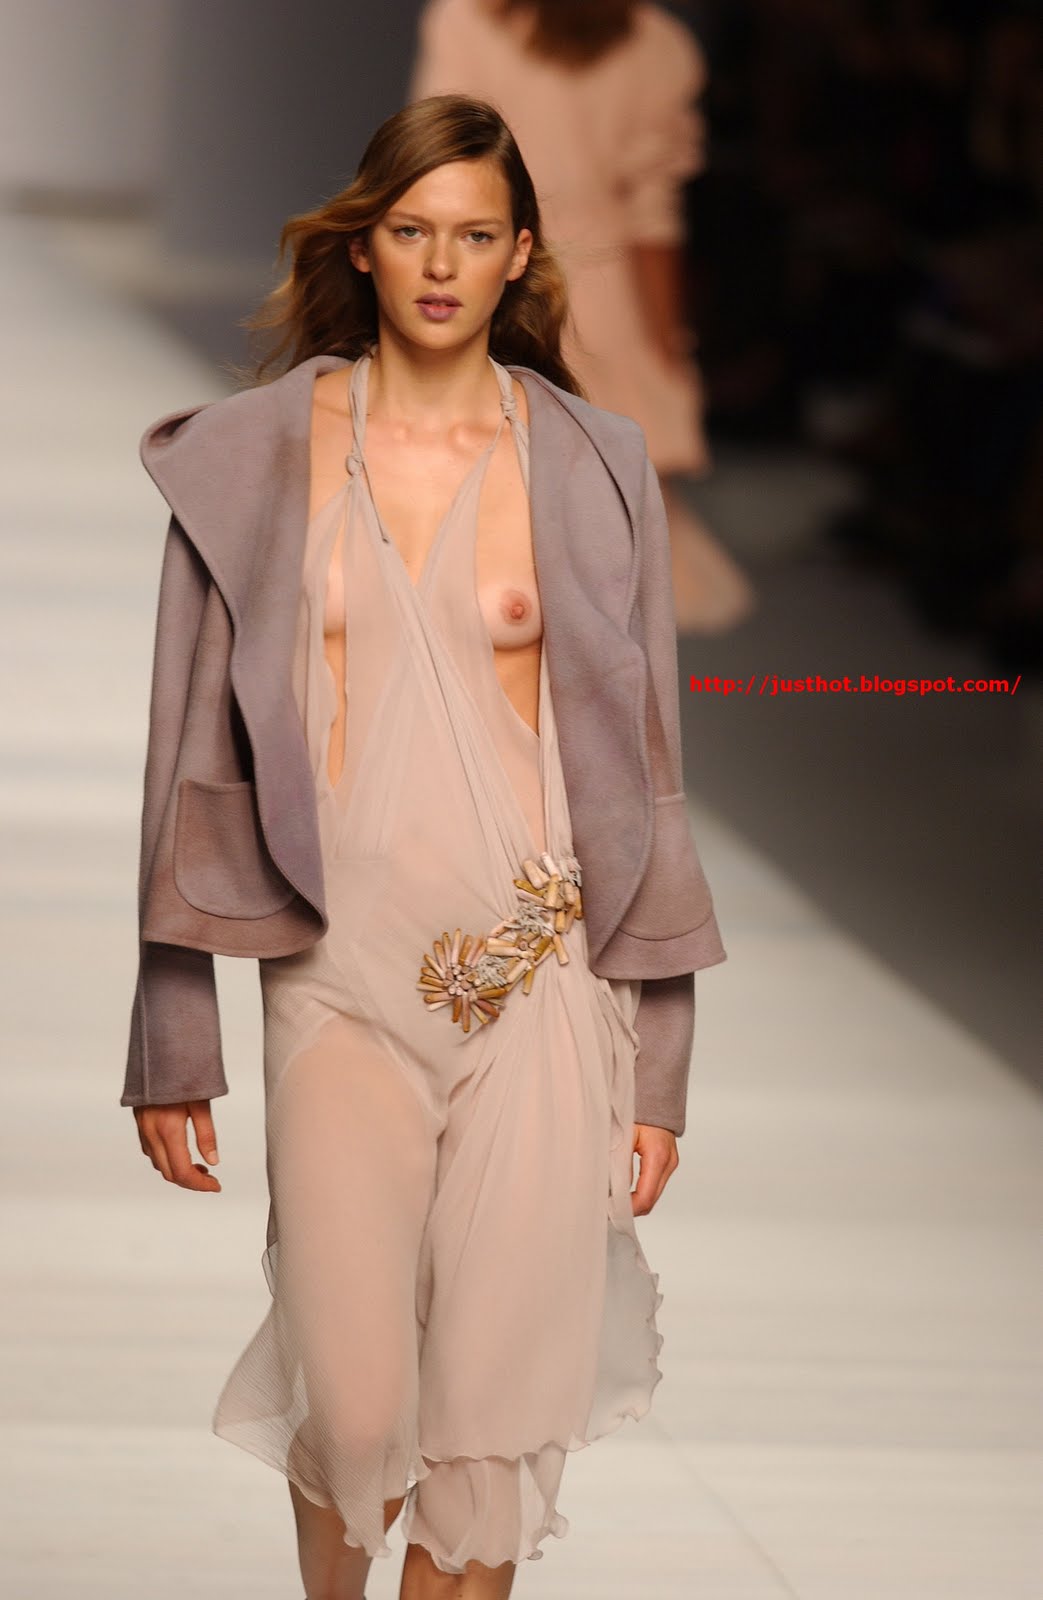 Naked teen runway models - Pics and galleries